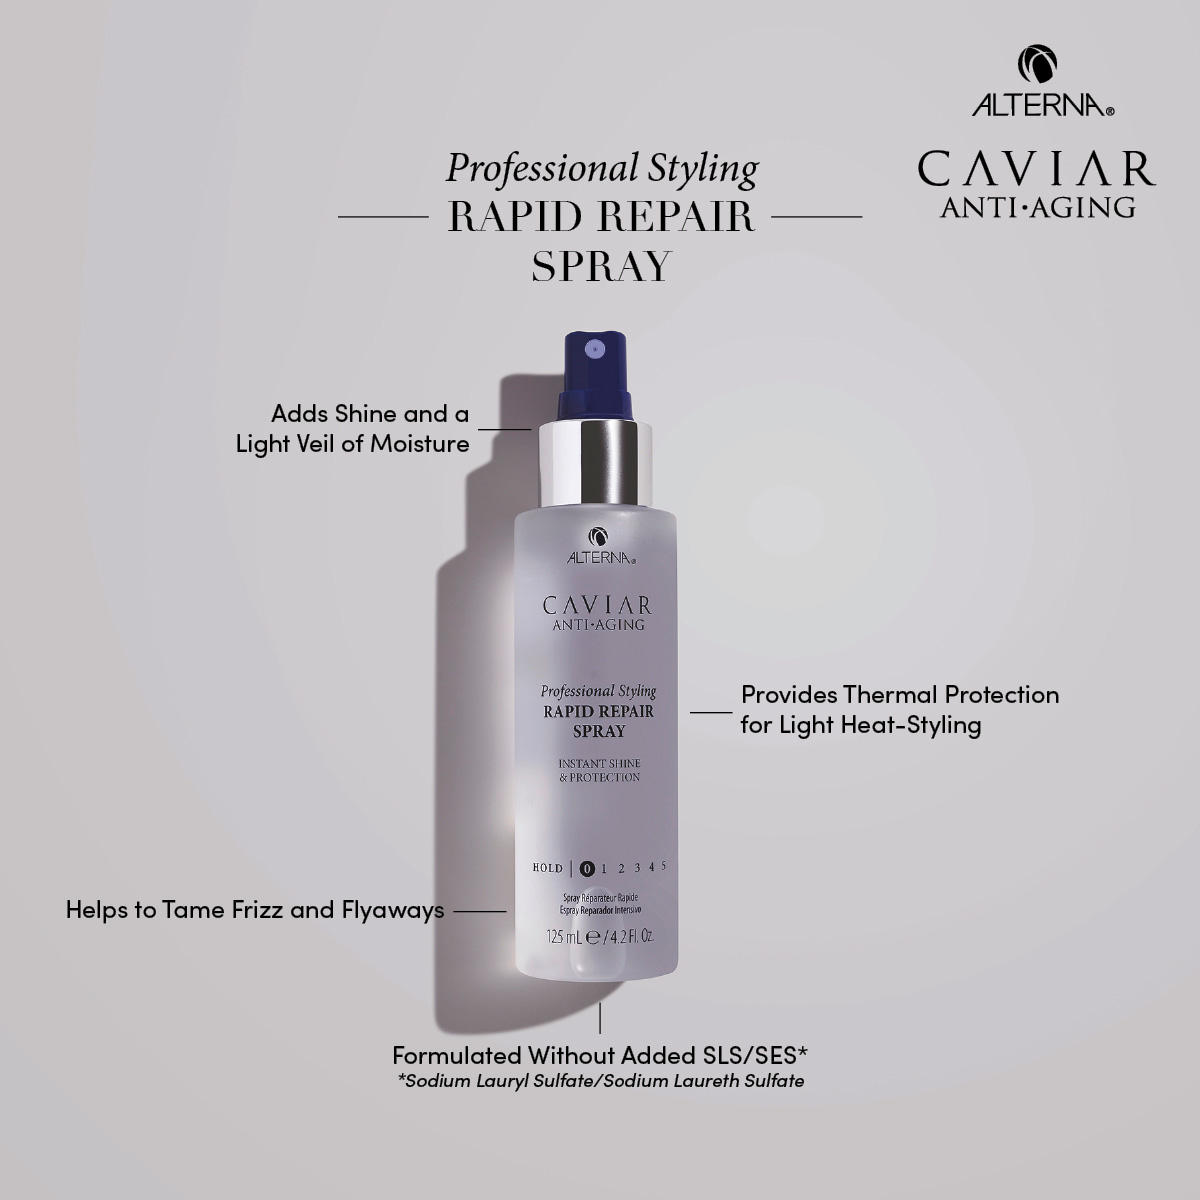 Alterna Caviar Anti-Aging Professional Styling Rapid Repair Spray 125 ml - 3